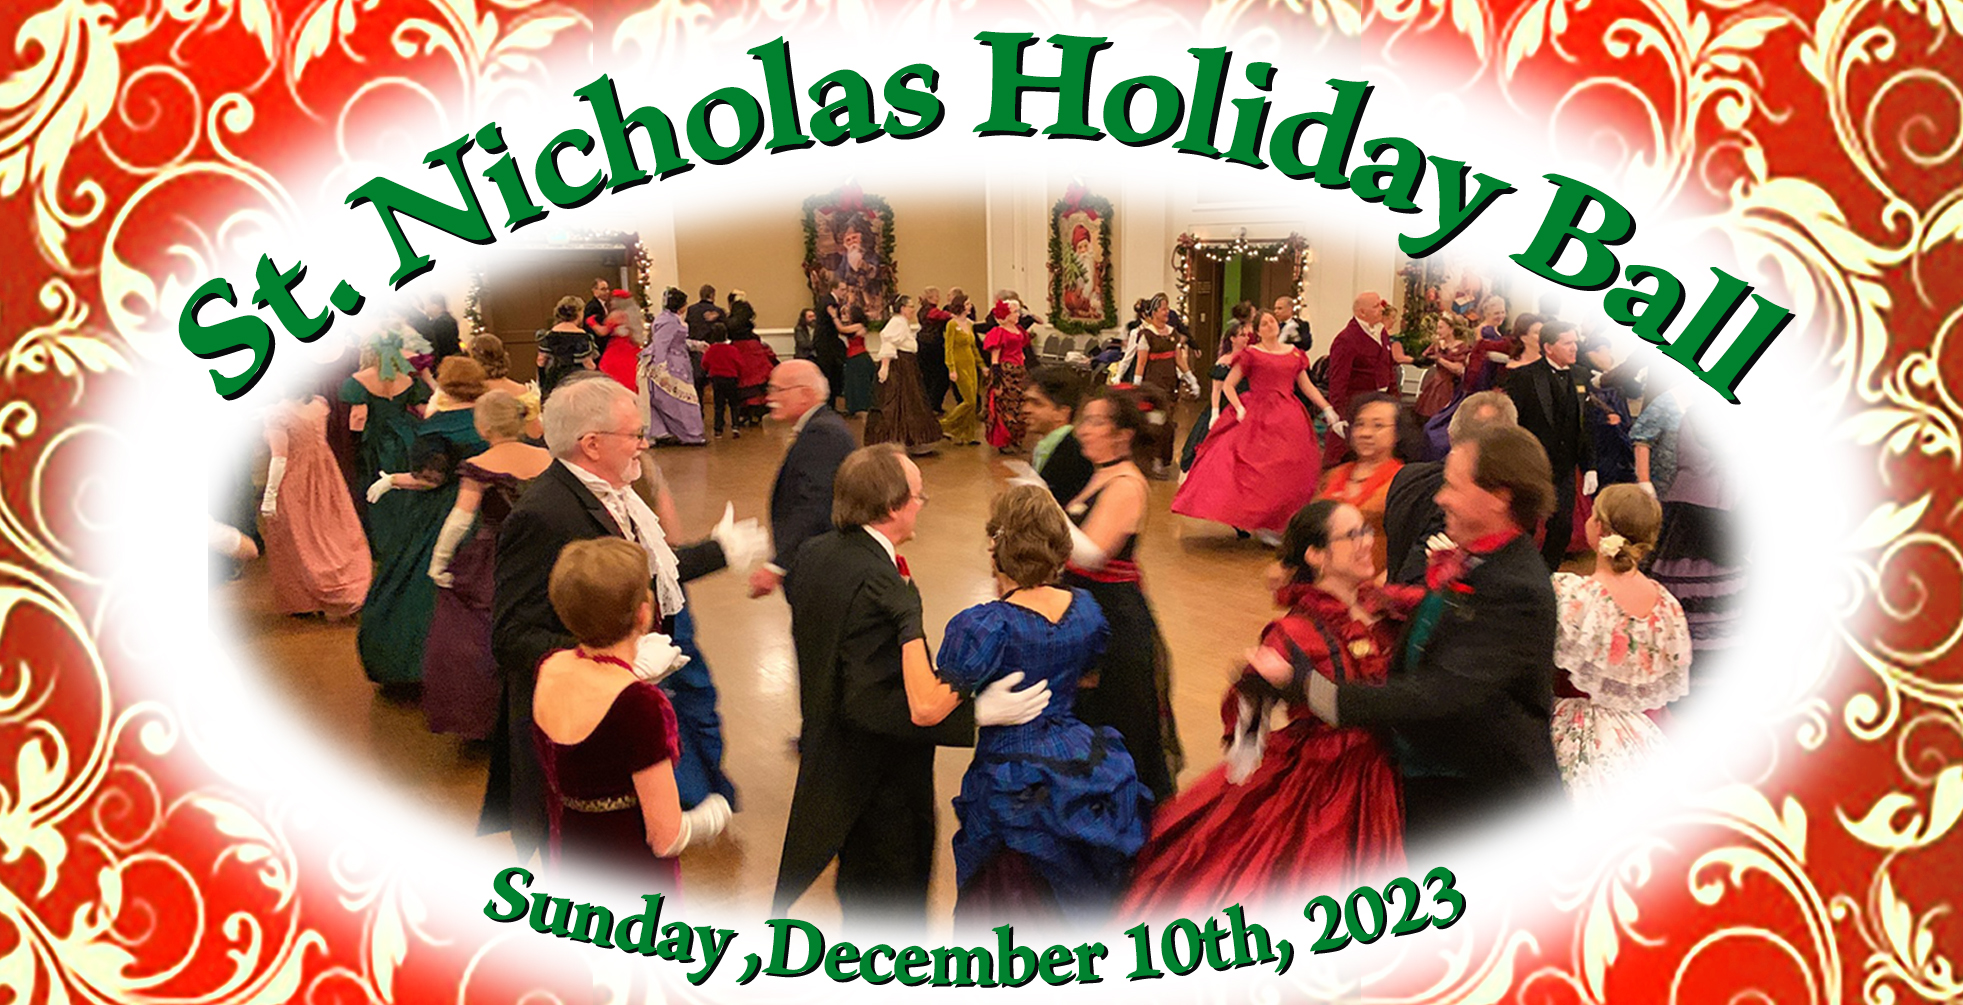 St. Nicholas Holiday Ball 2023